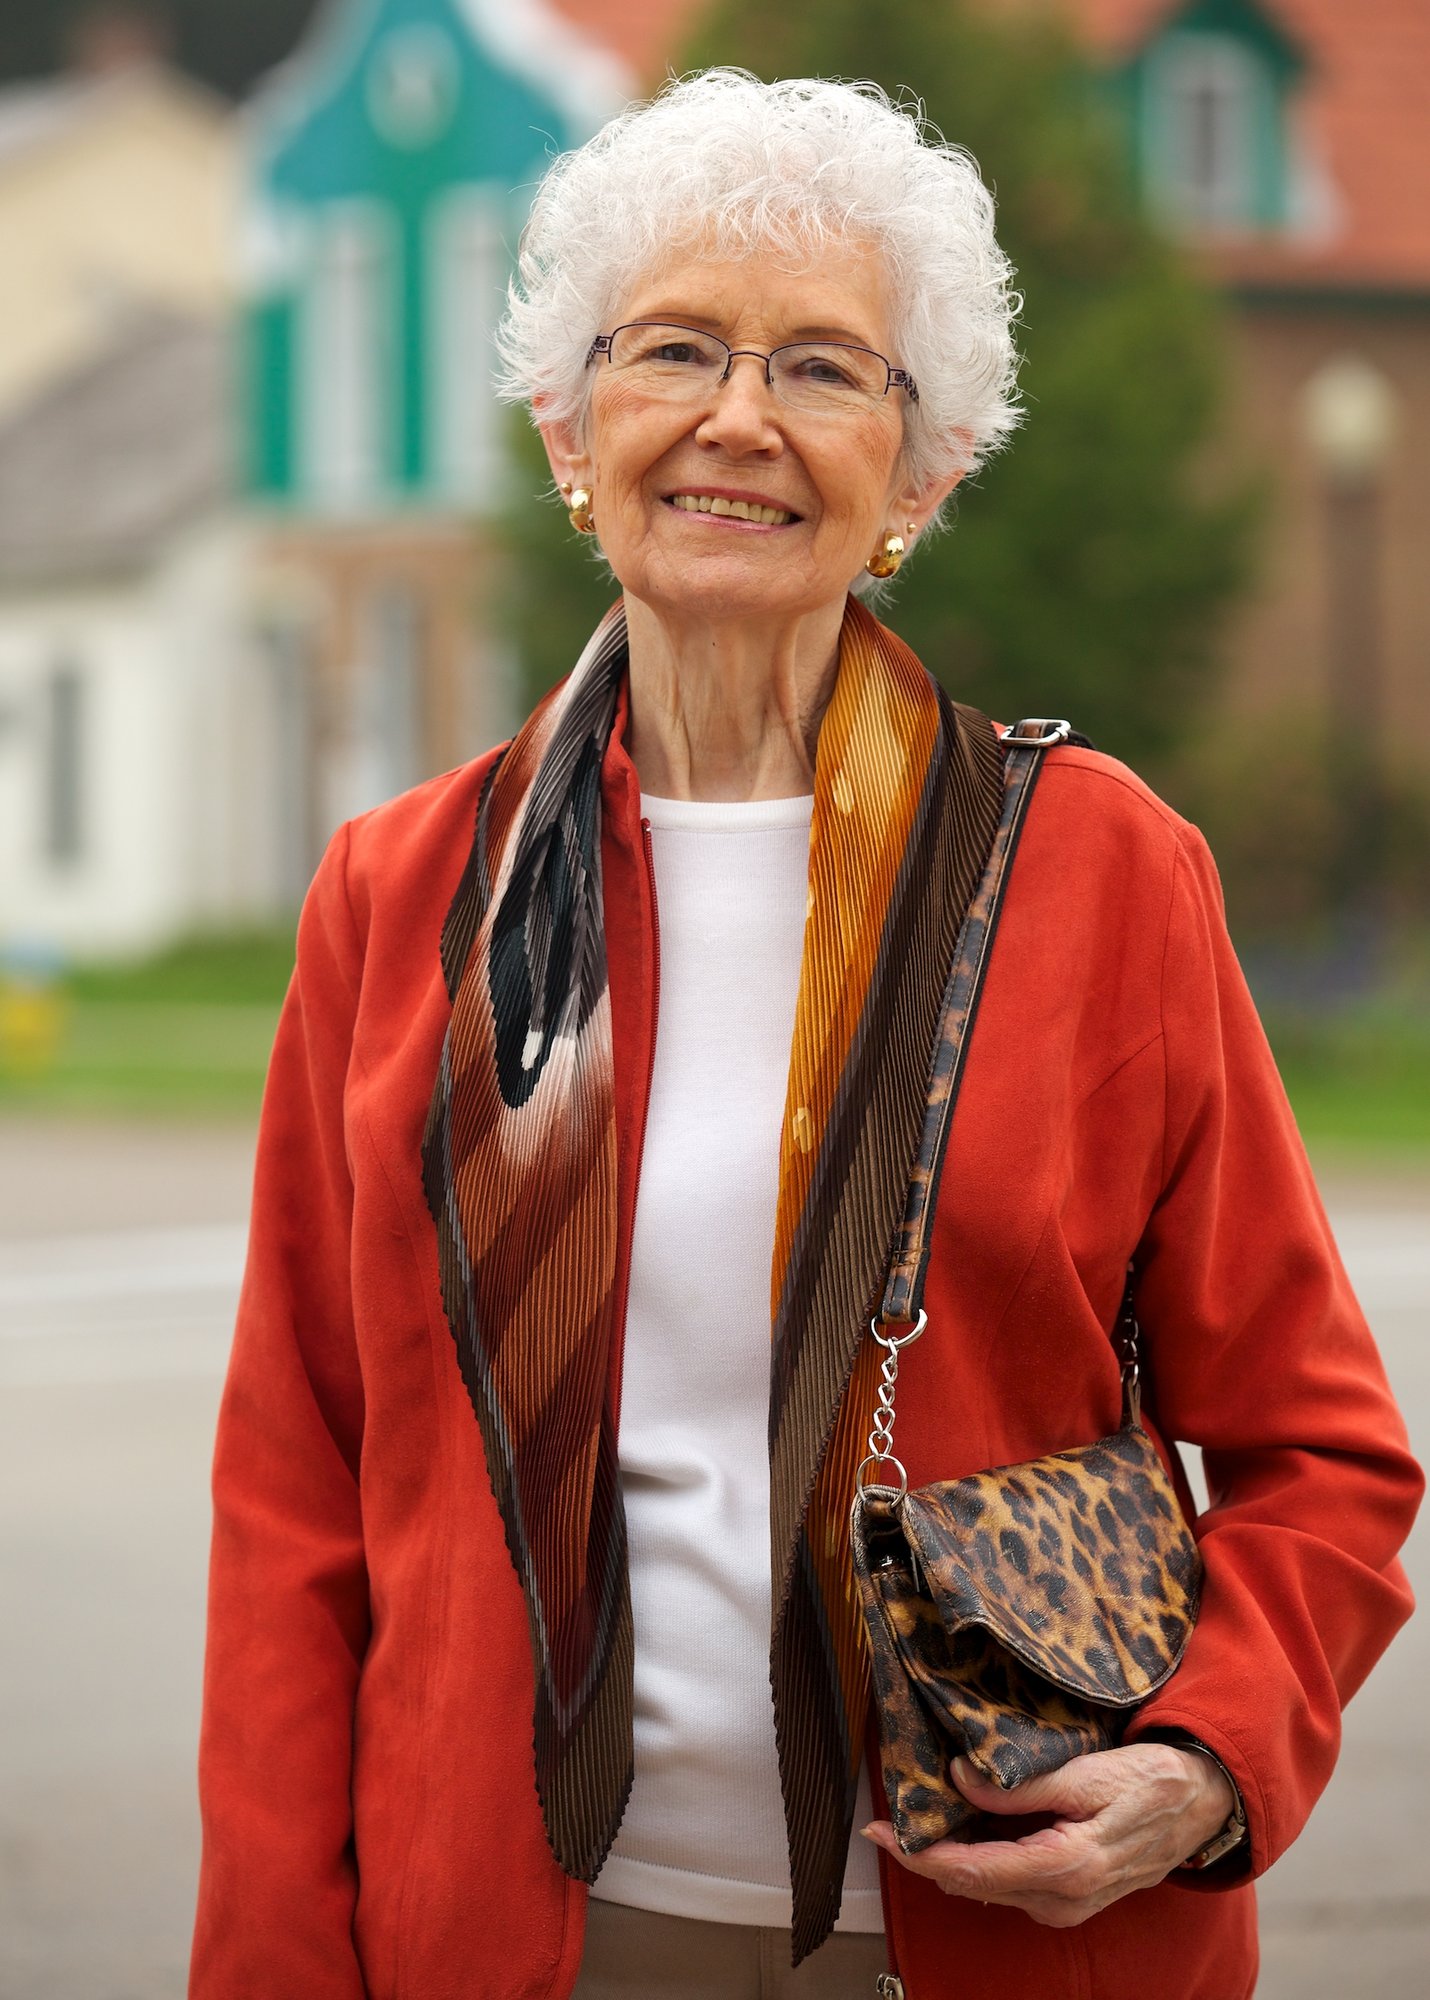 A senior woman smiling outside